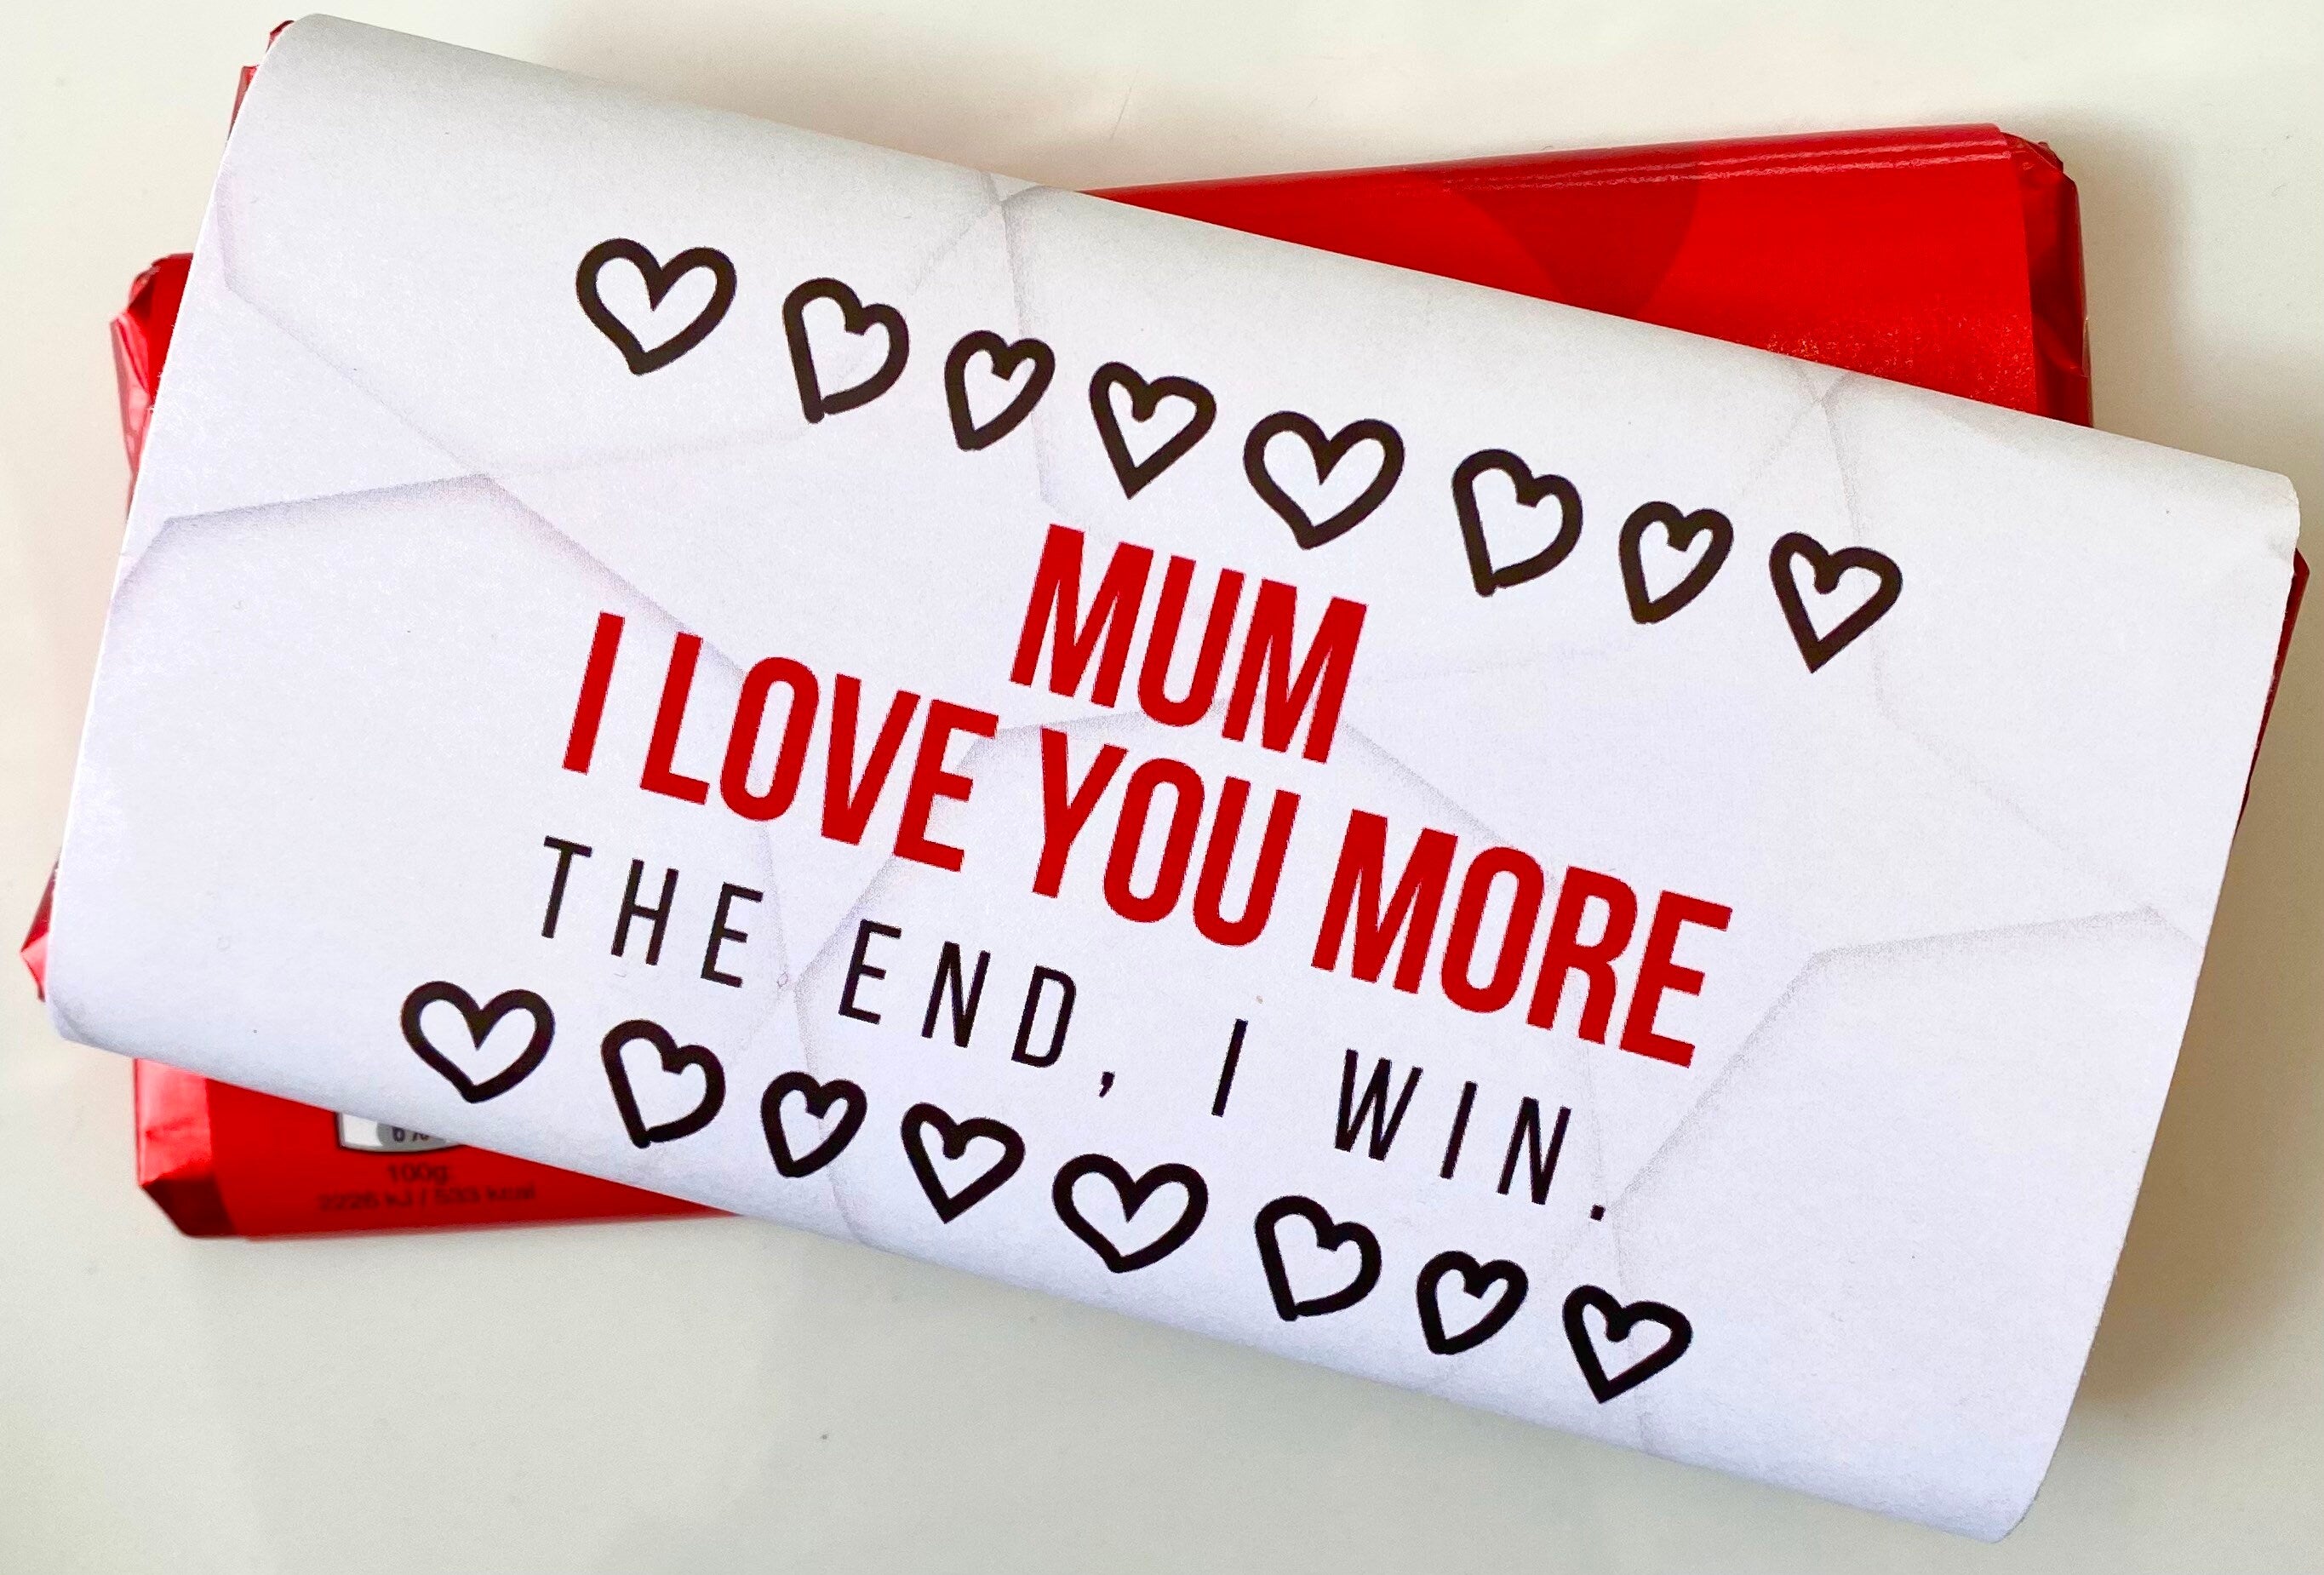 Mum I Love You More wrapped bar of Malteser chocolate.